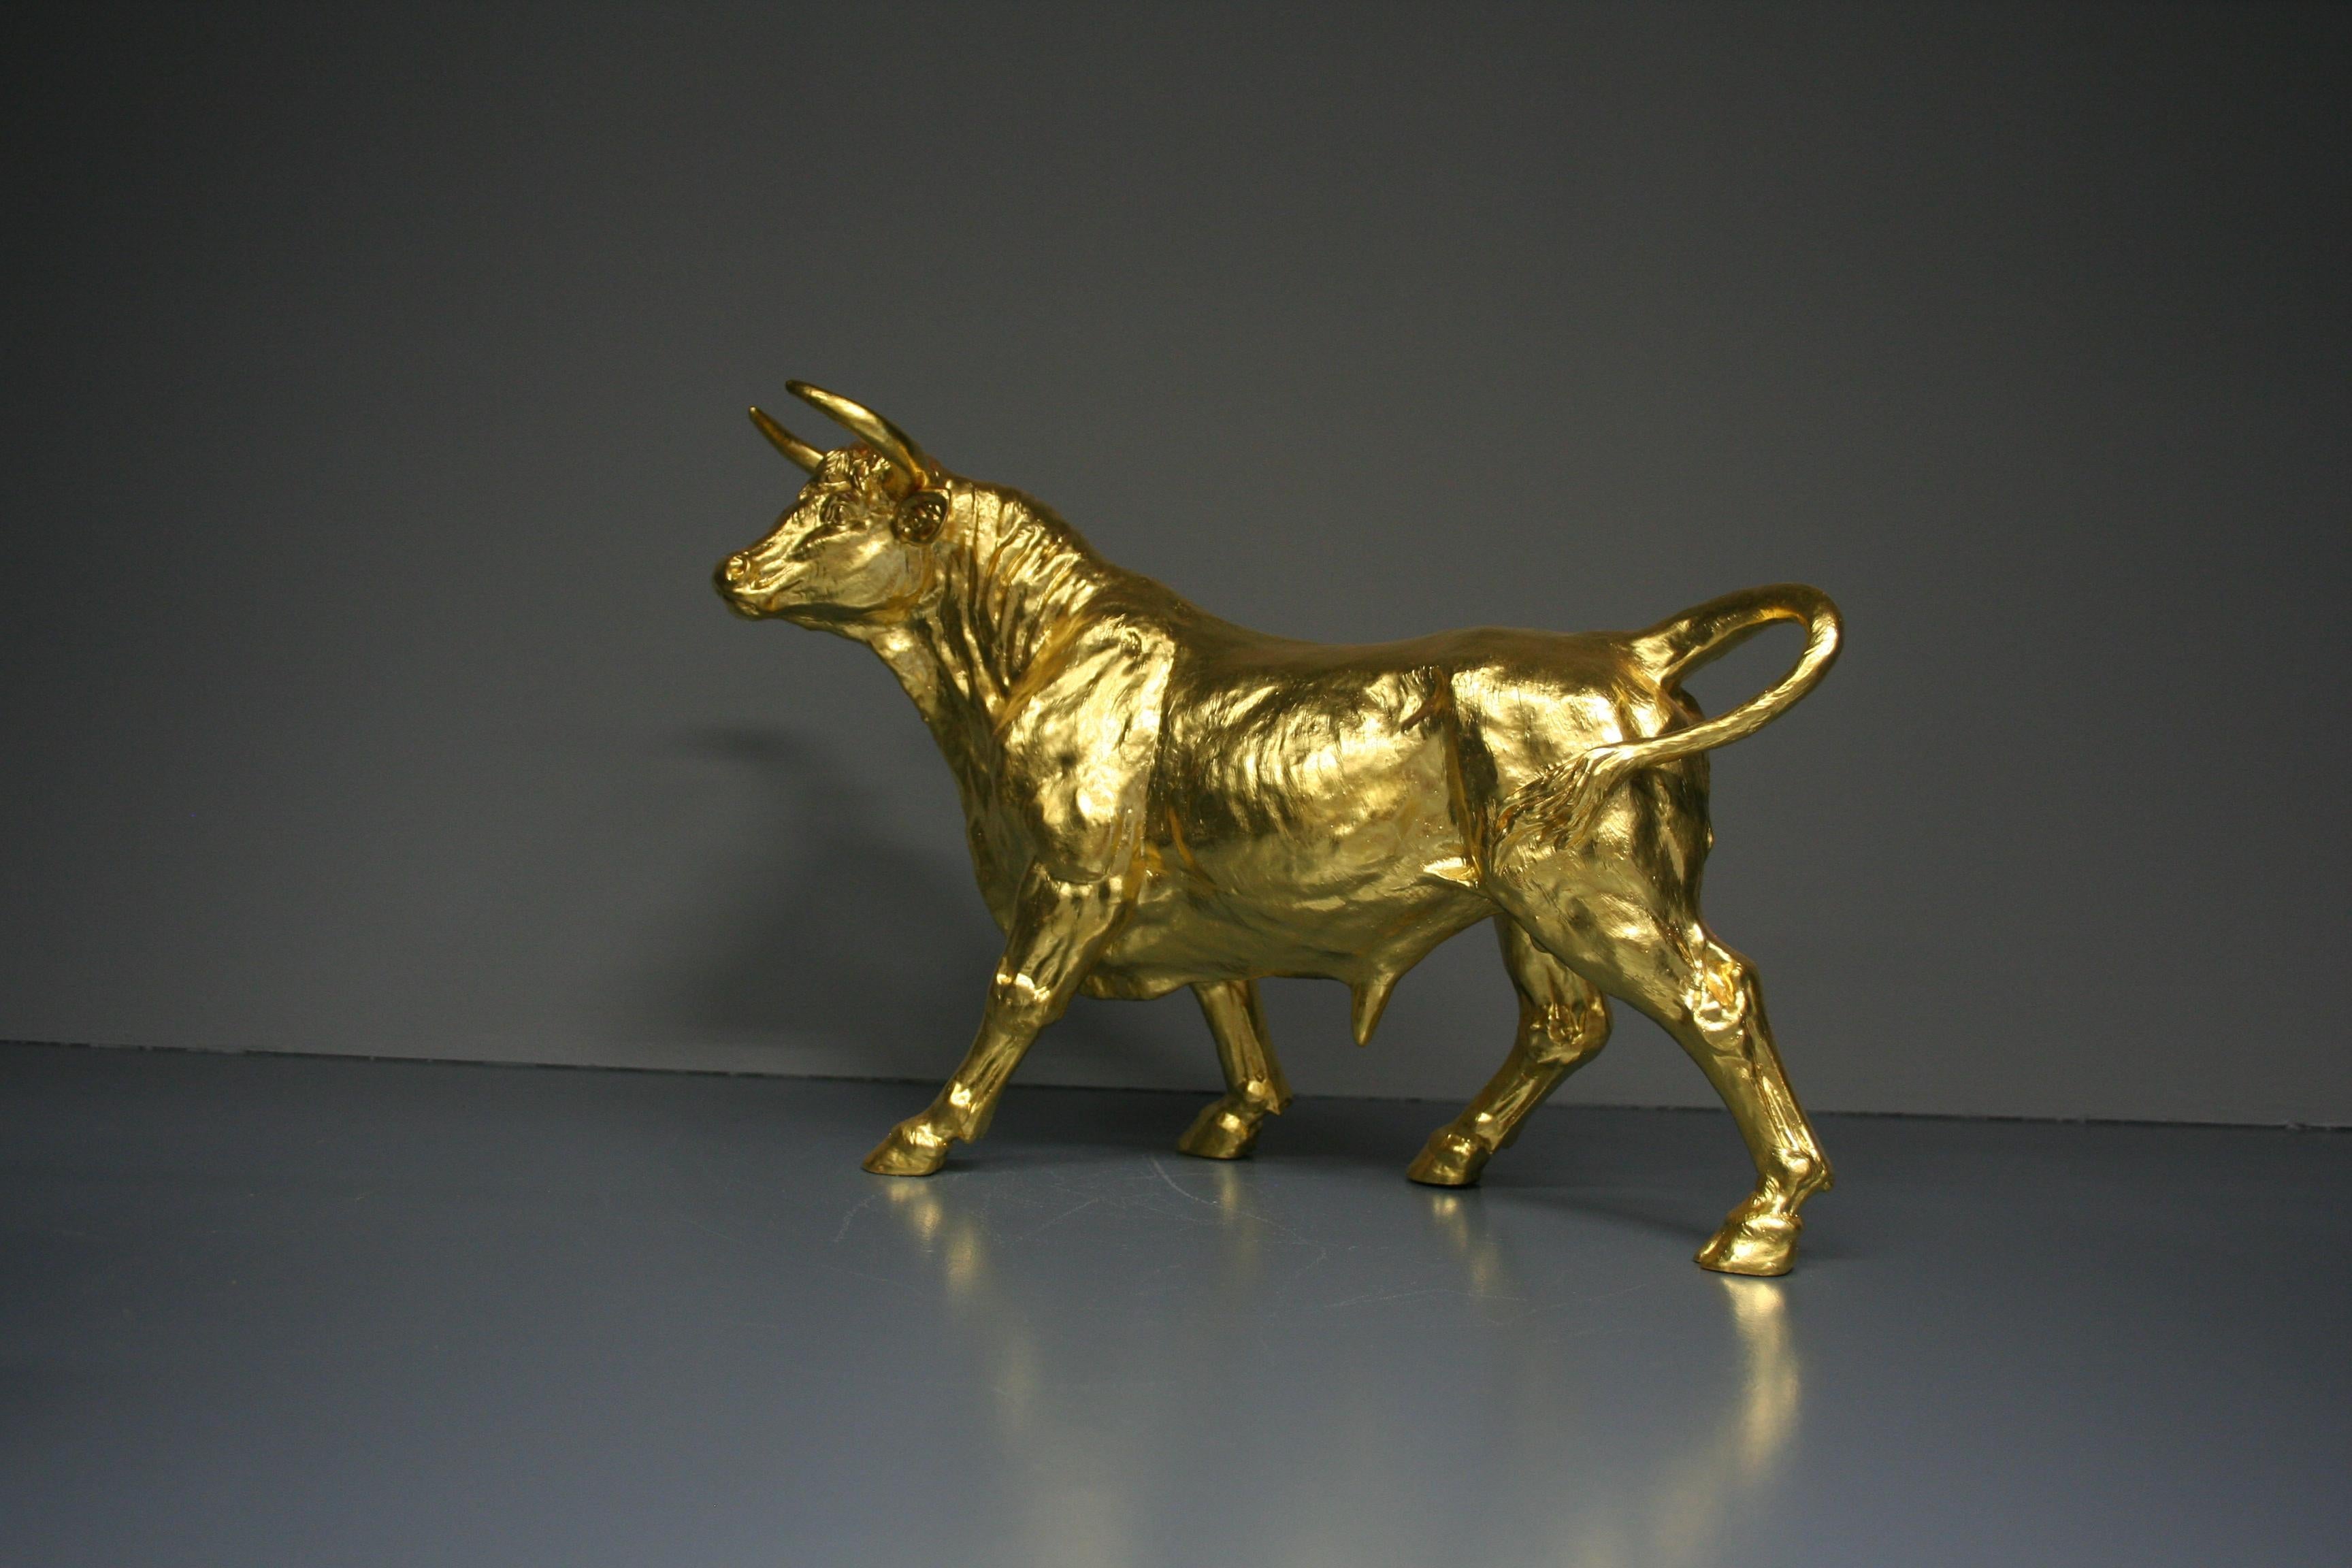 Steven Figurative Sculpture - Golden bull 24 Karat gilded